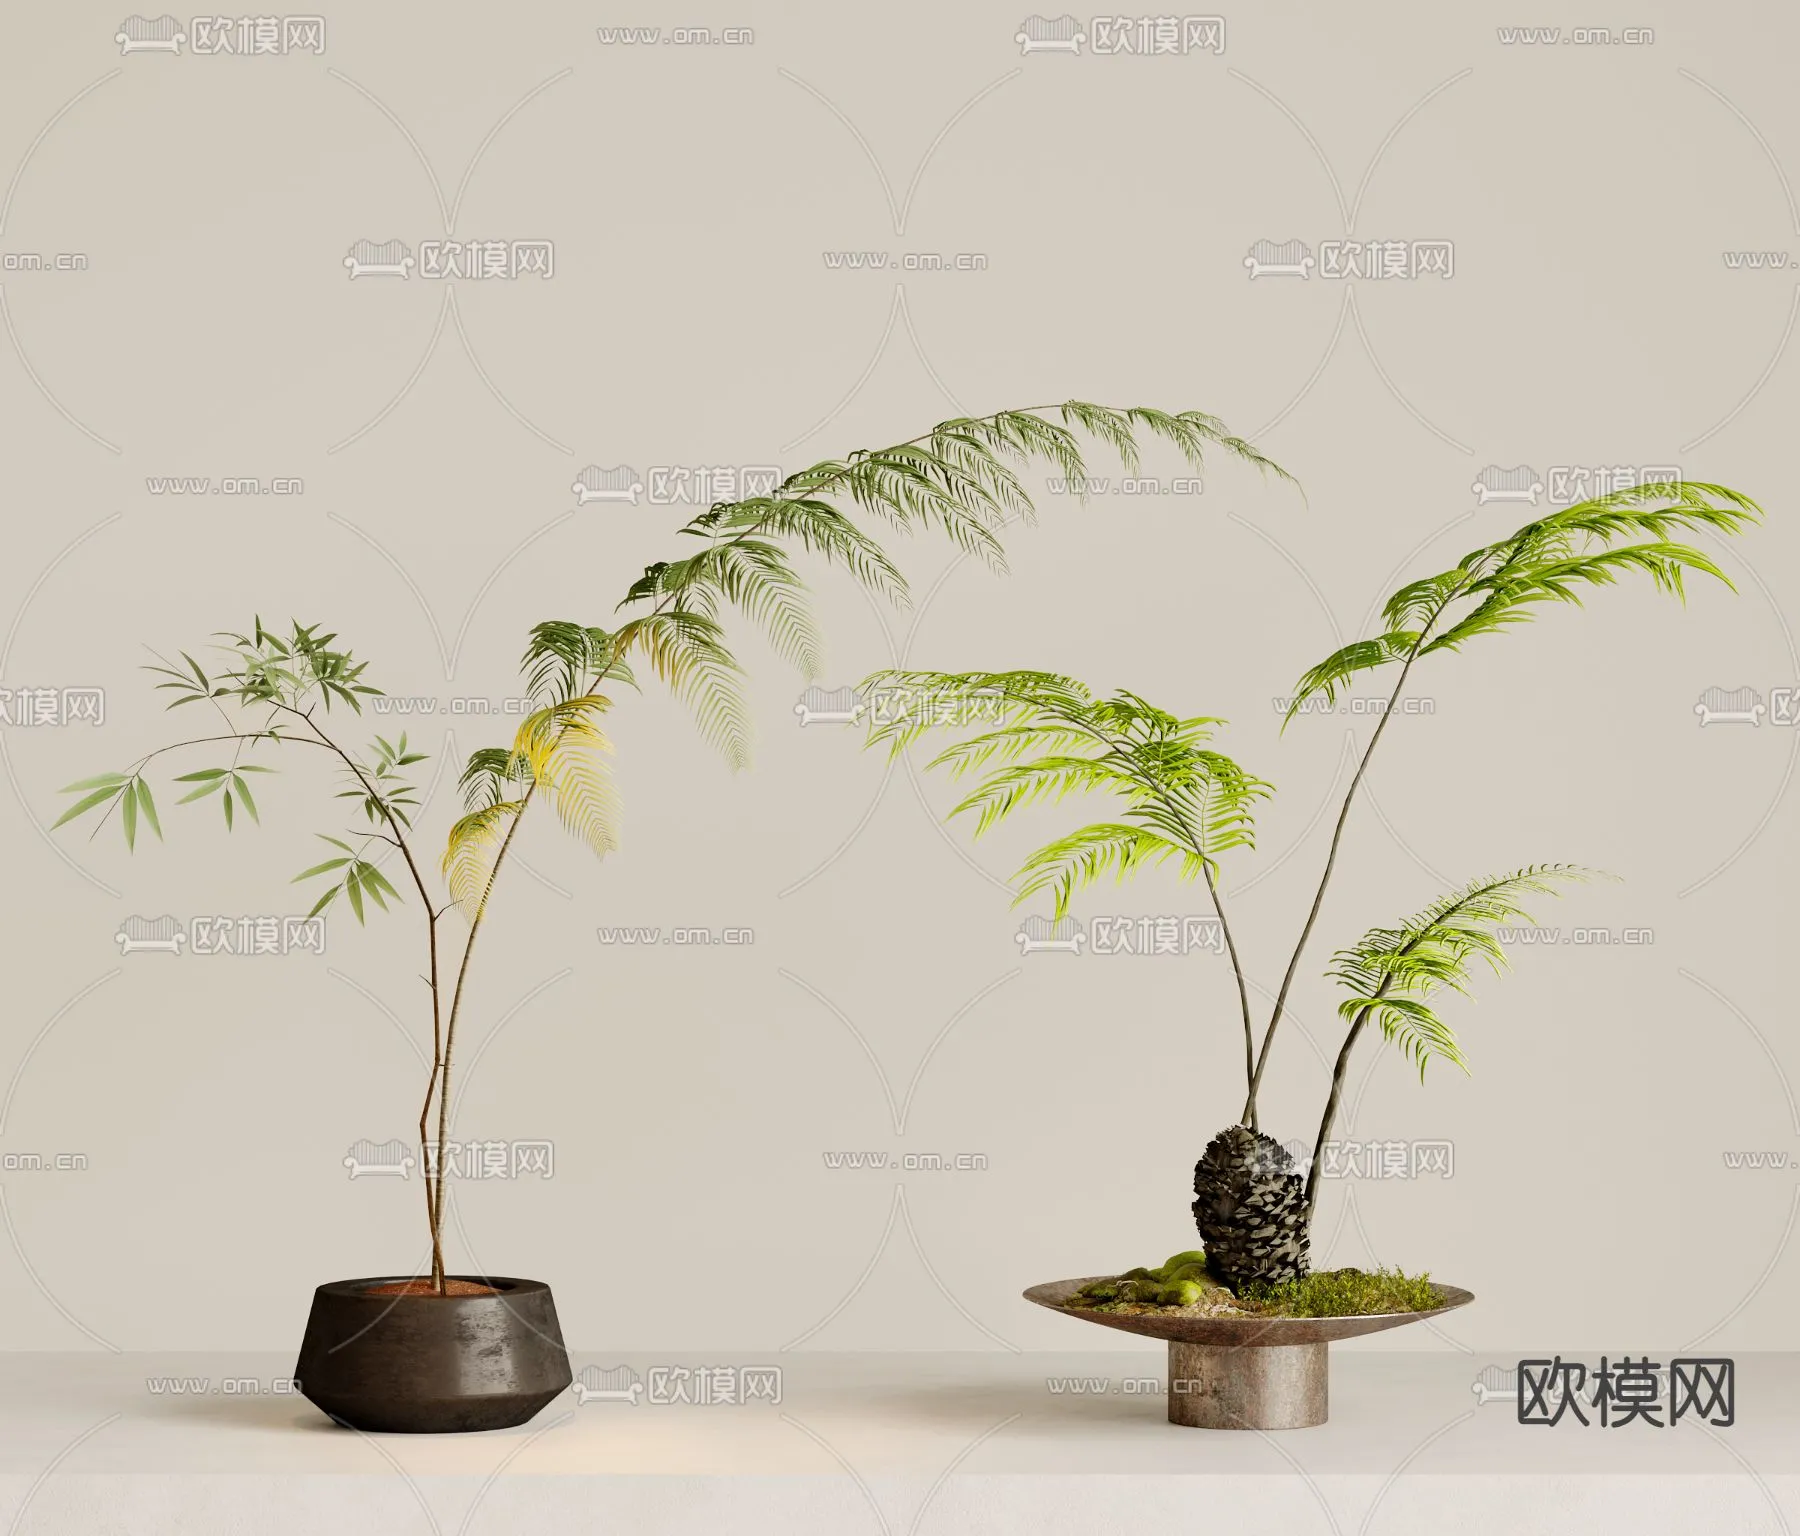 Plant – VRAY / CORONA – 3D MODEL – 448